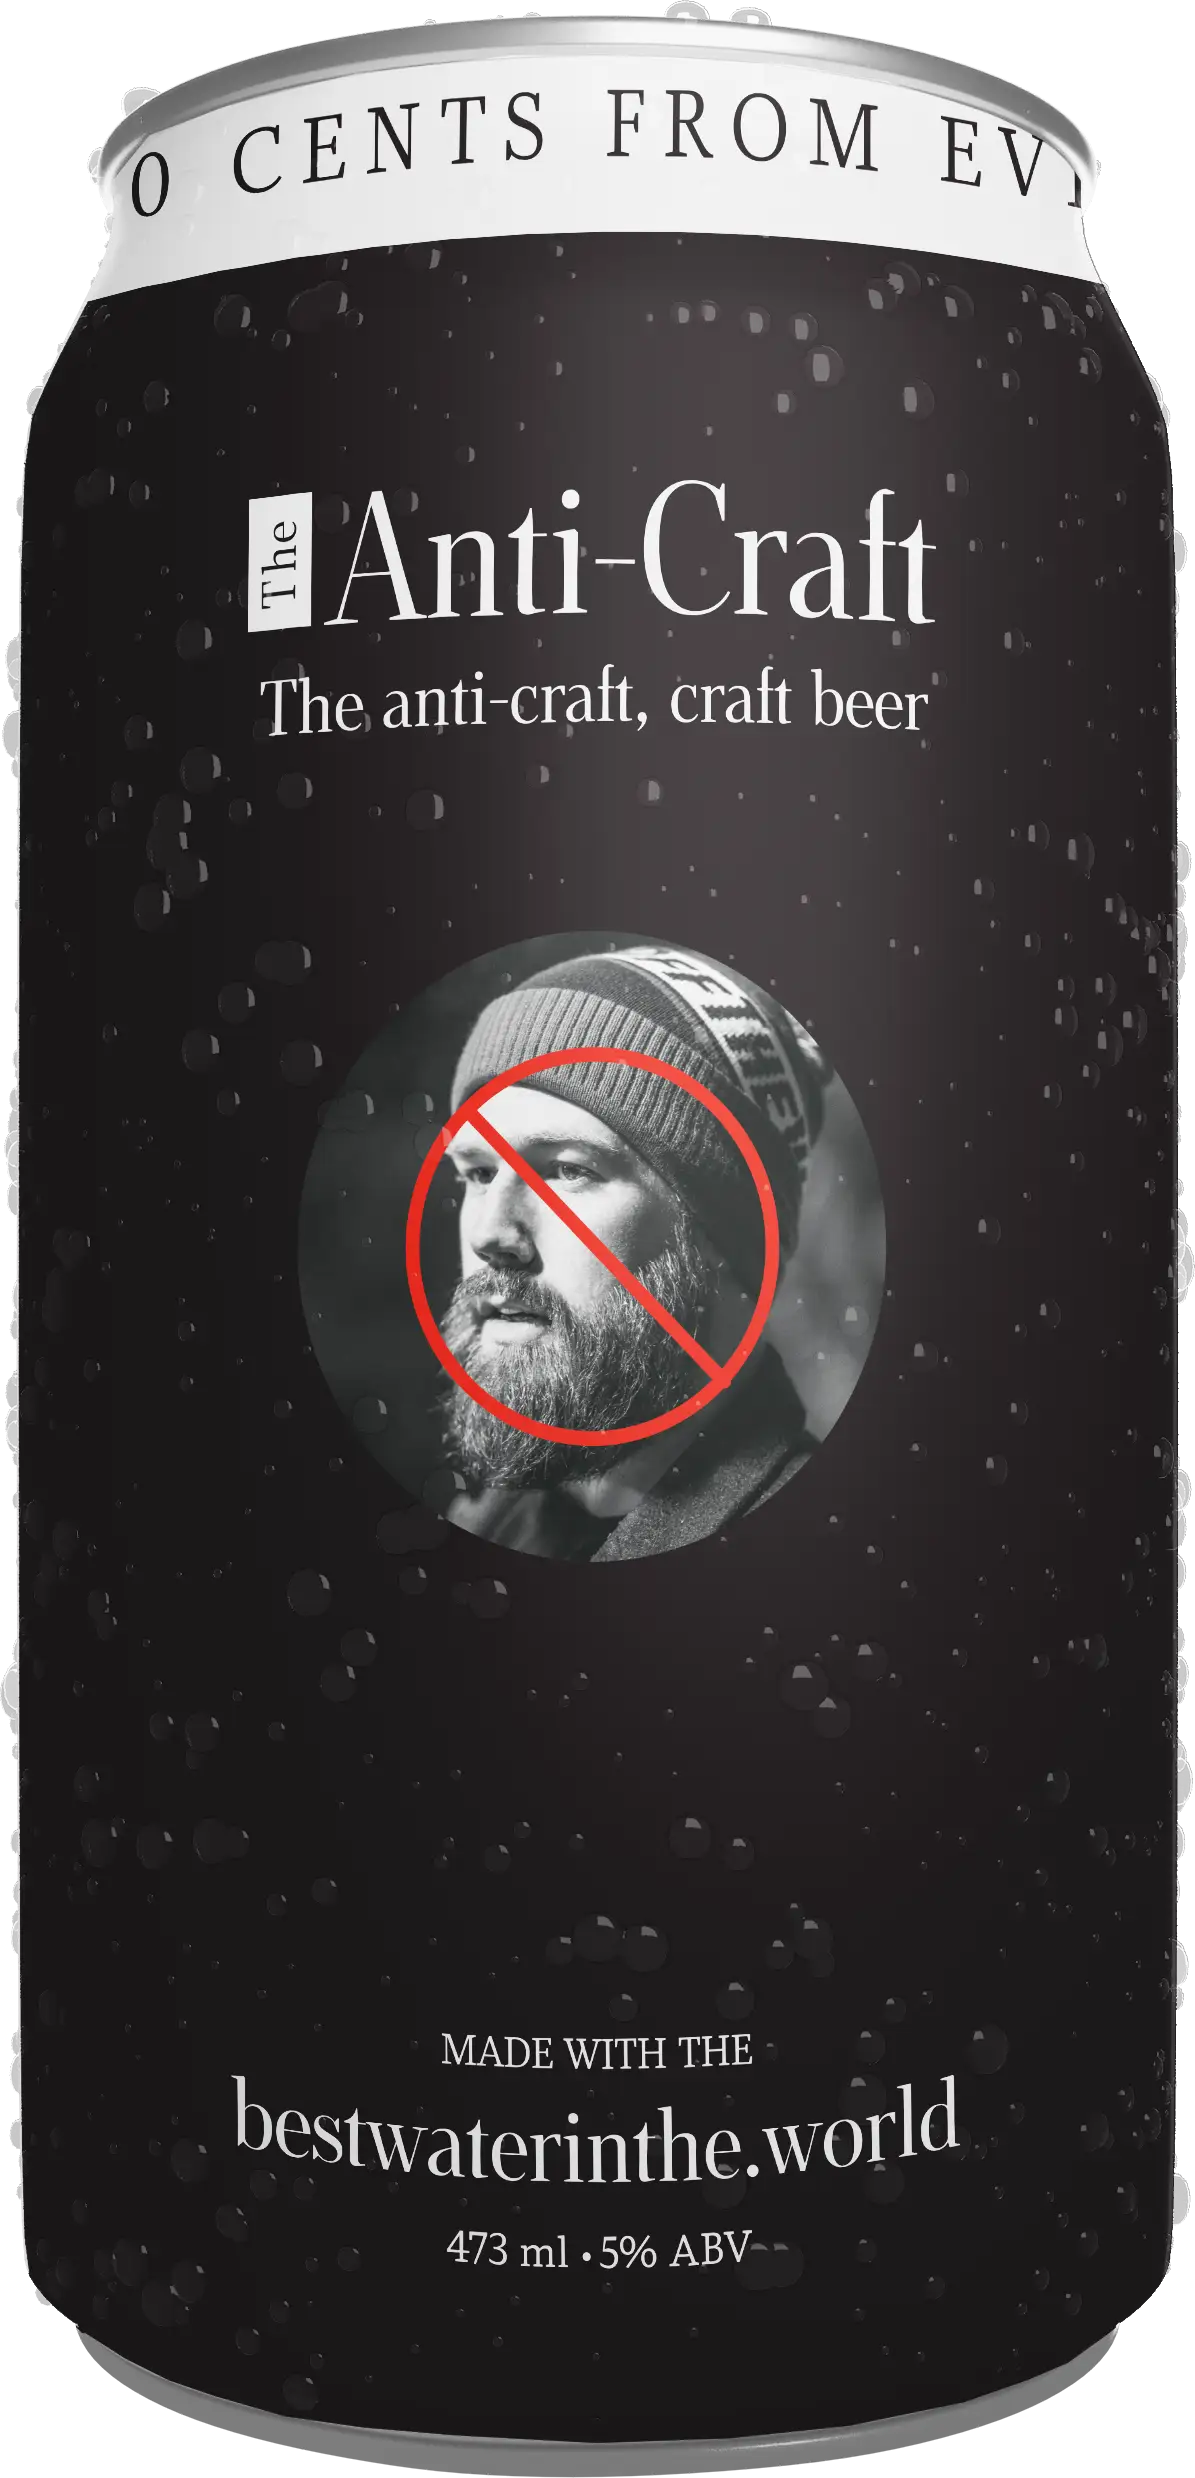 The Anti-Craft Craft Beer